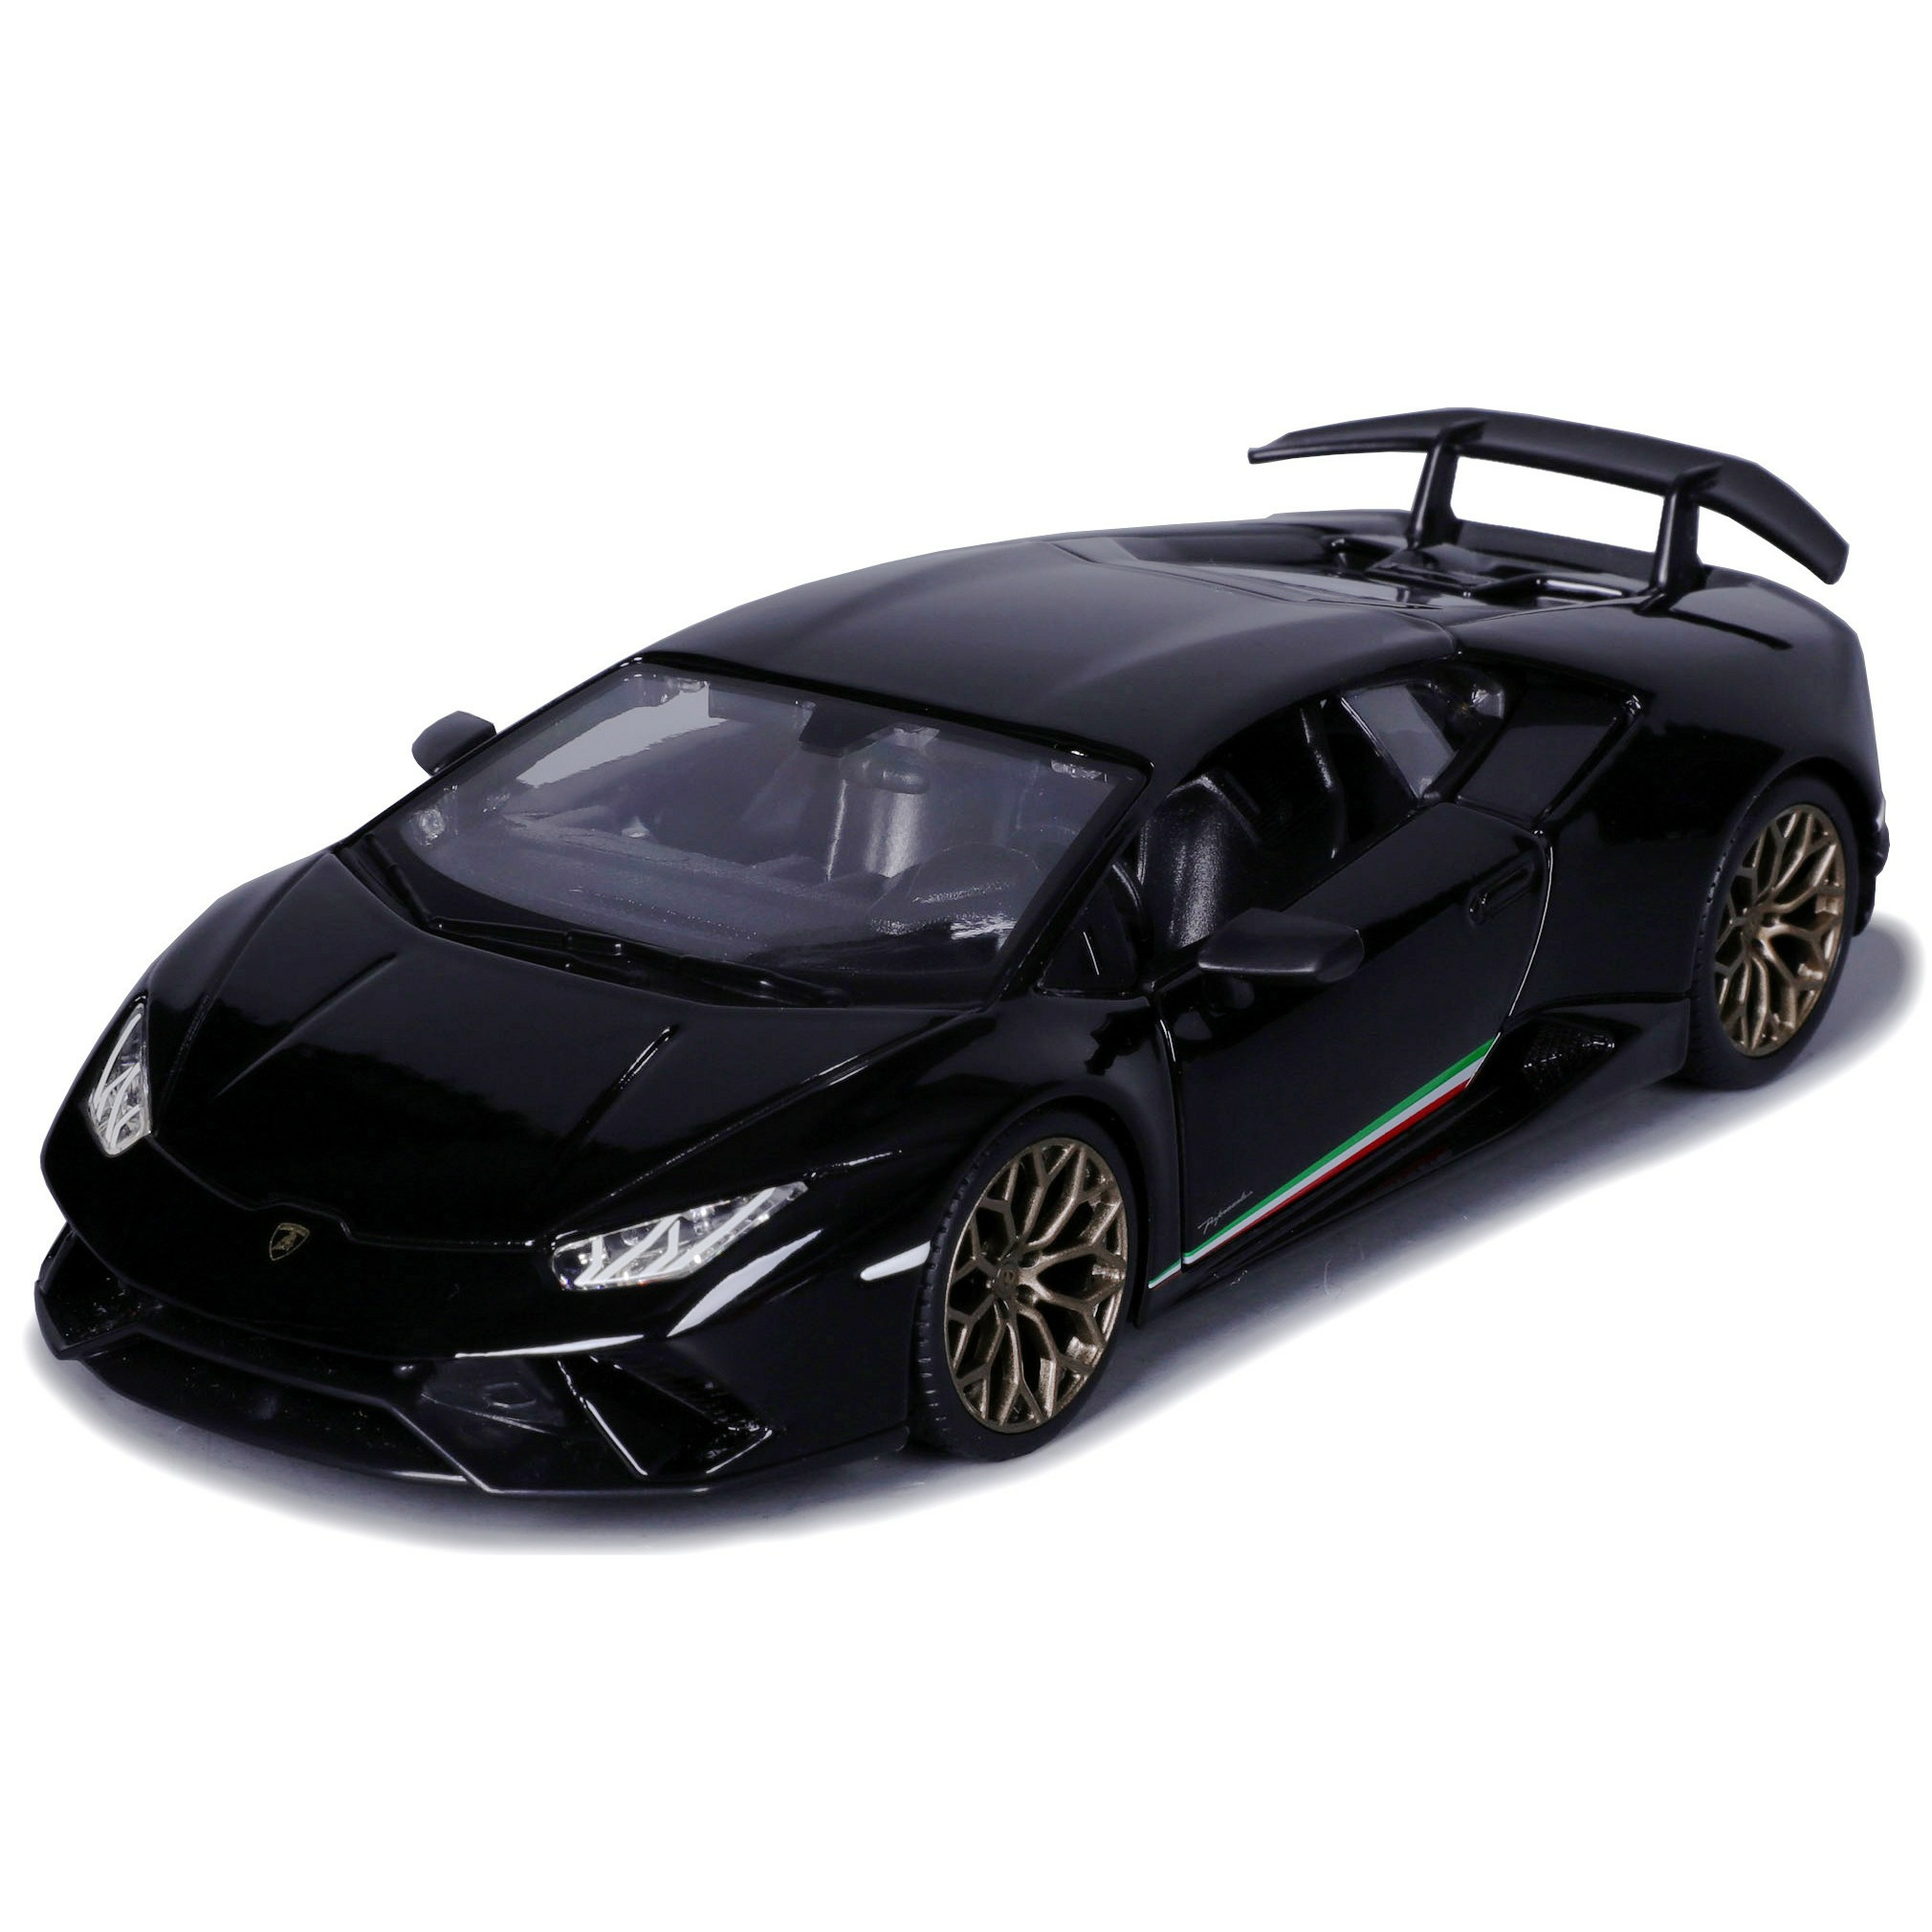 Modelauto-speelgoedauto Lamborghini Huracan Performante zwart schaal 1:24-19 x 8 x 5 cm